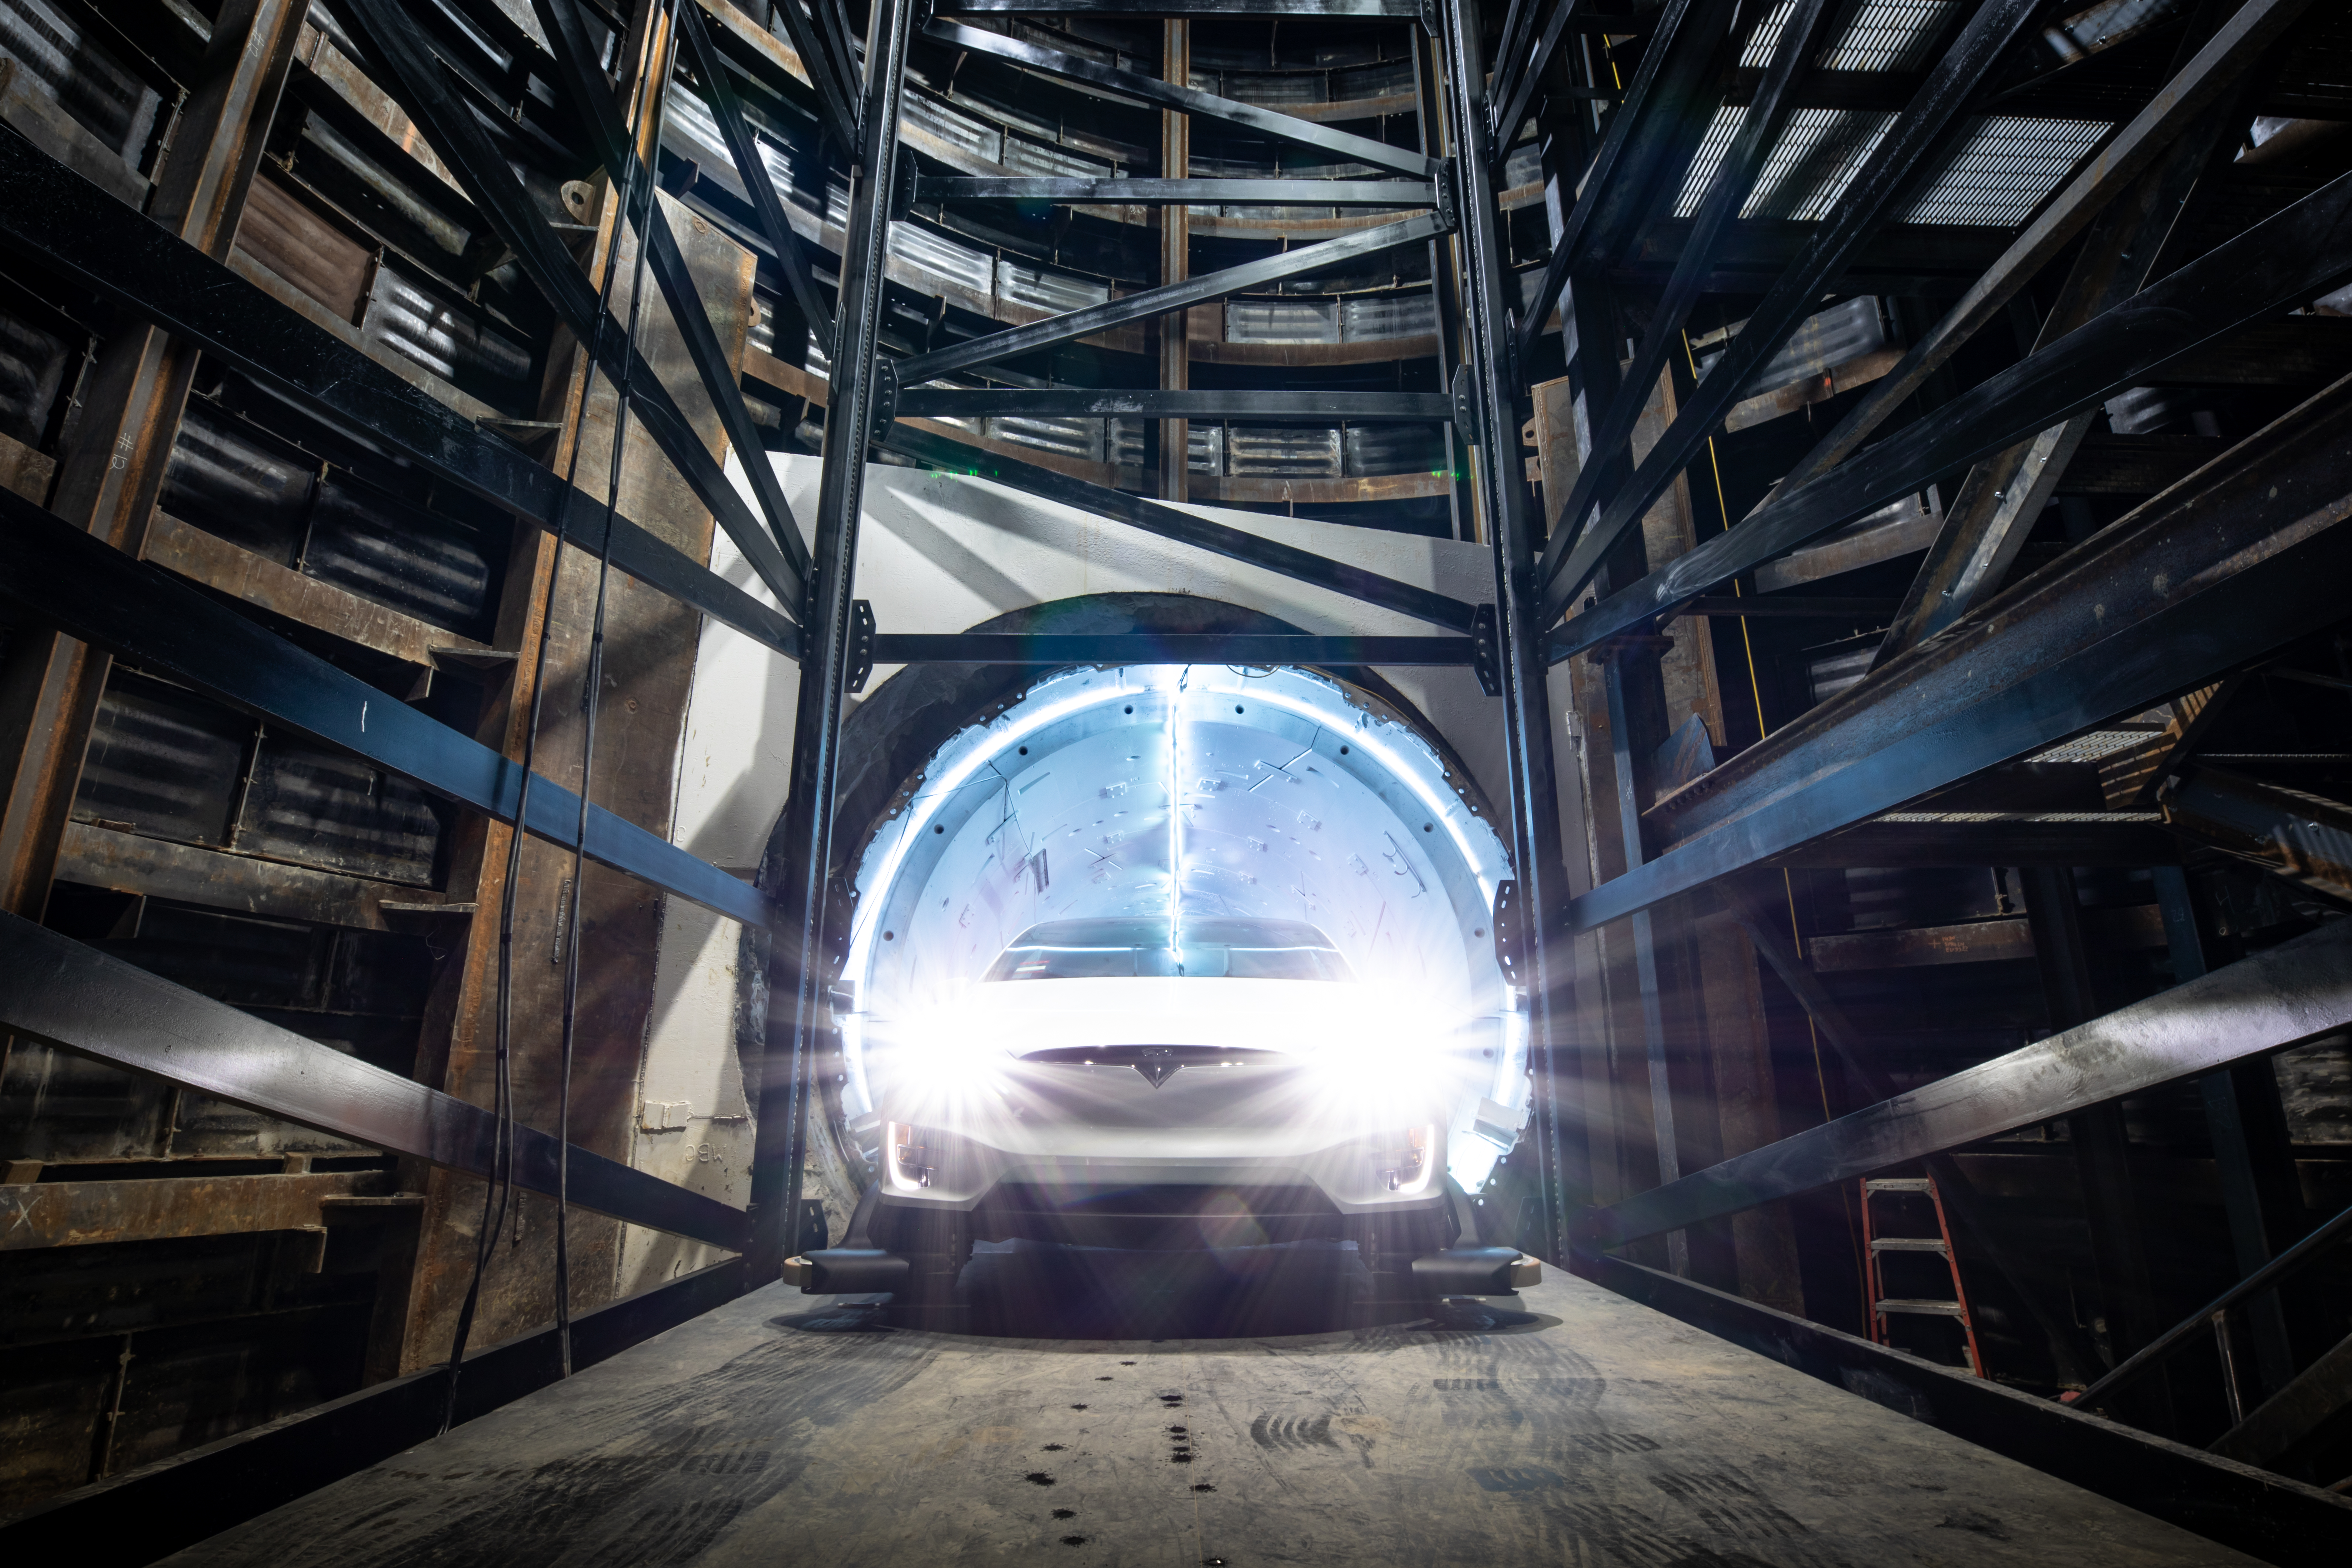 Musks Tunnelsystem mit Autonomen E-Autos: Loop